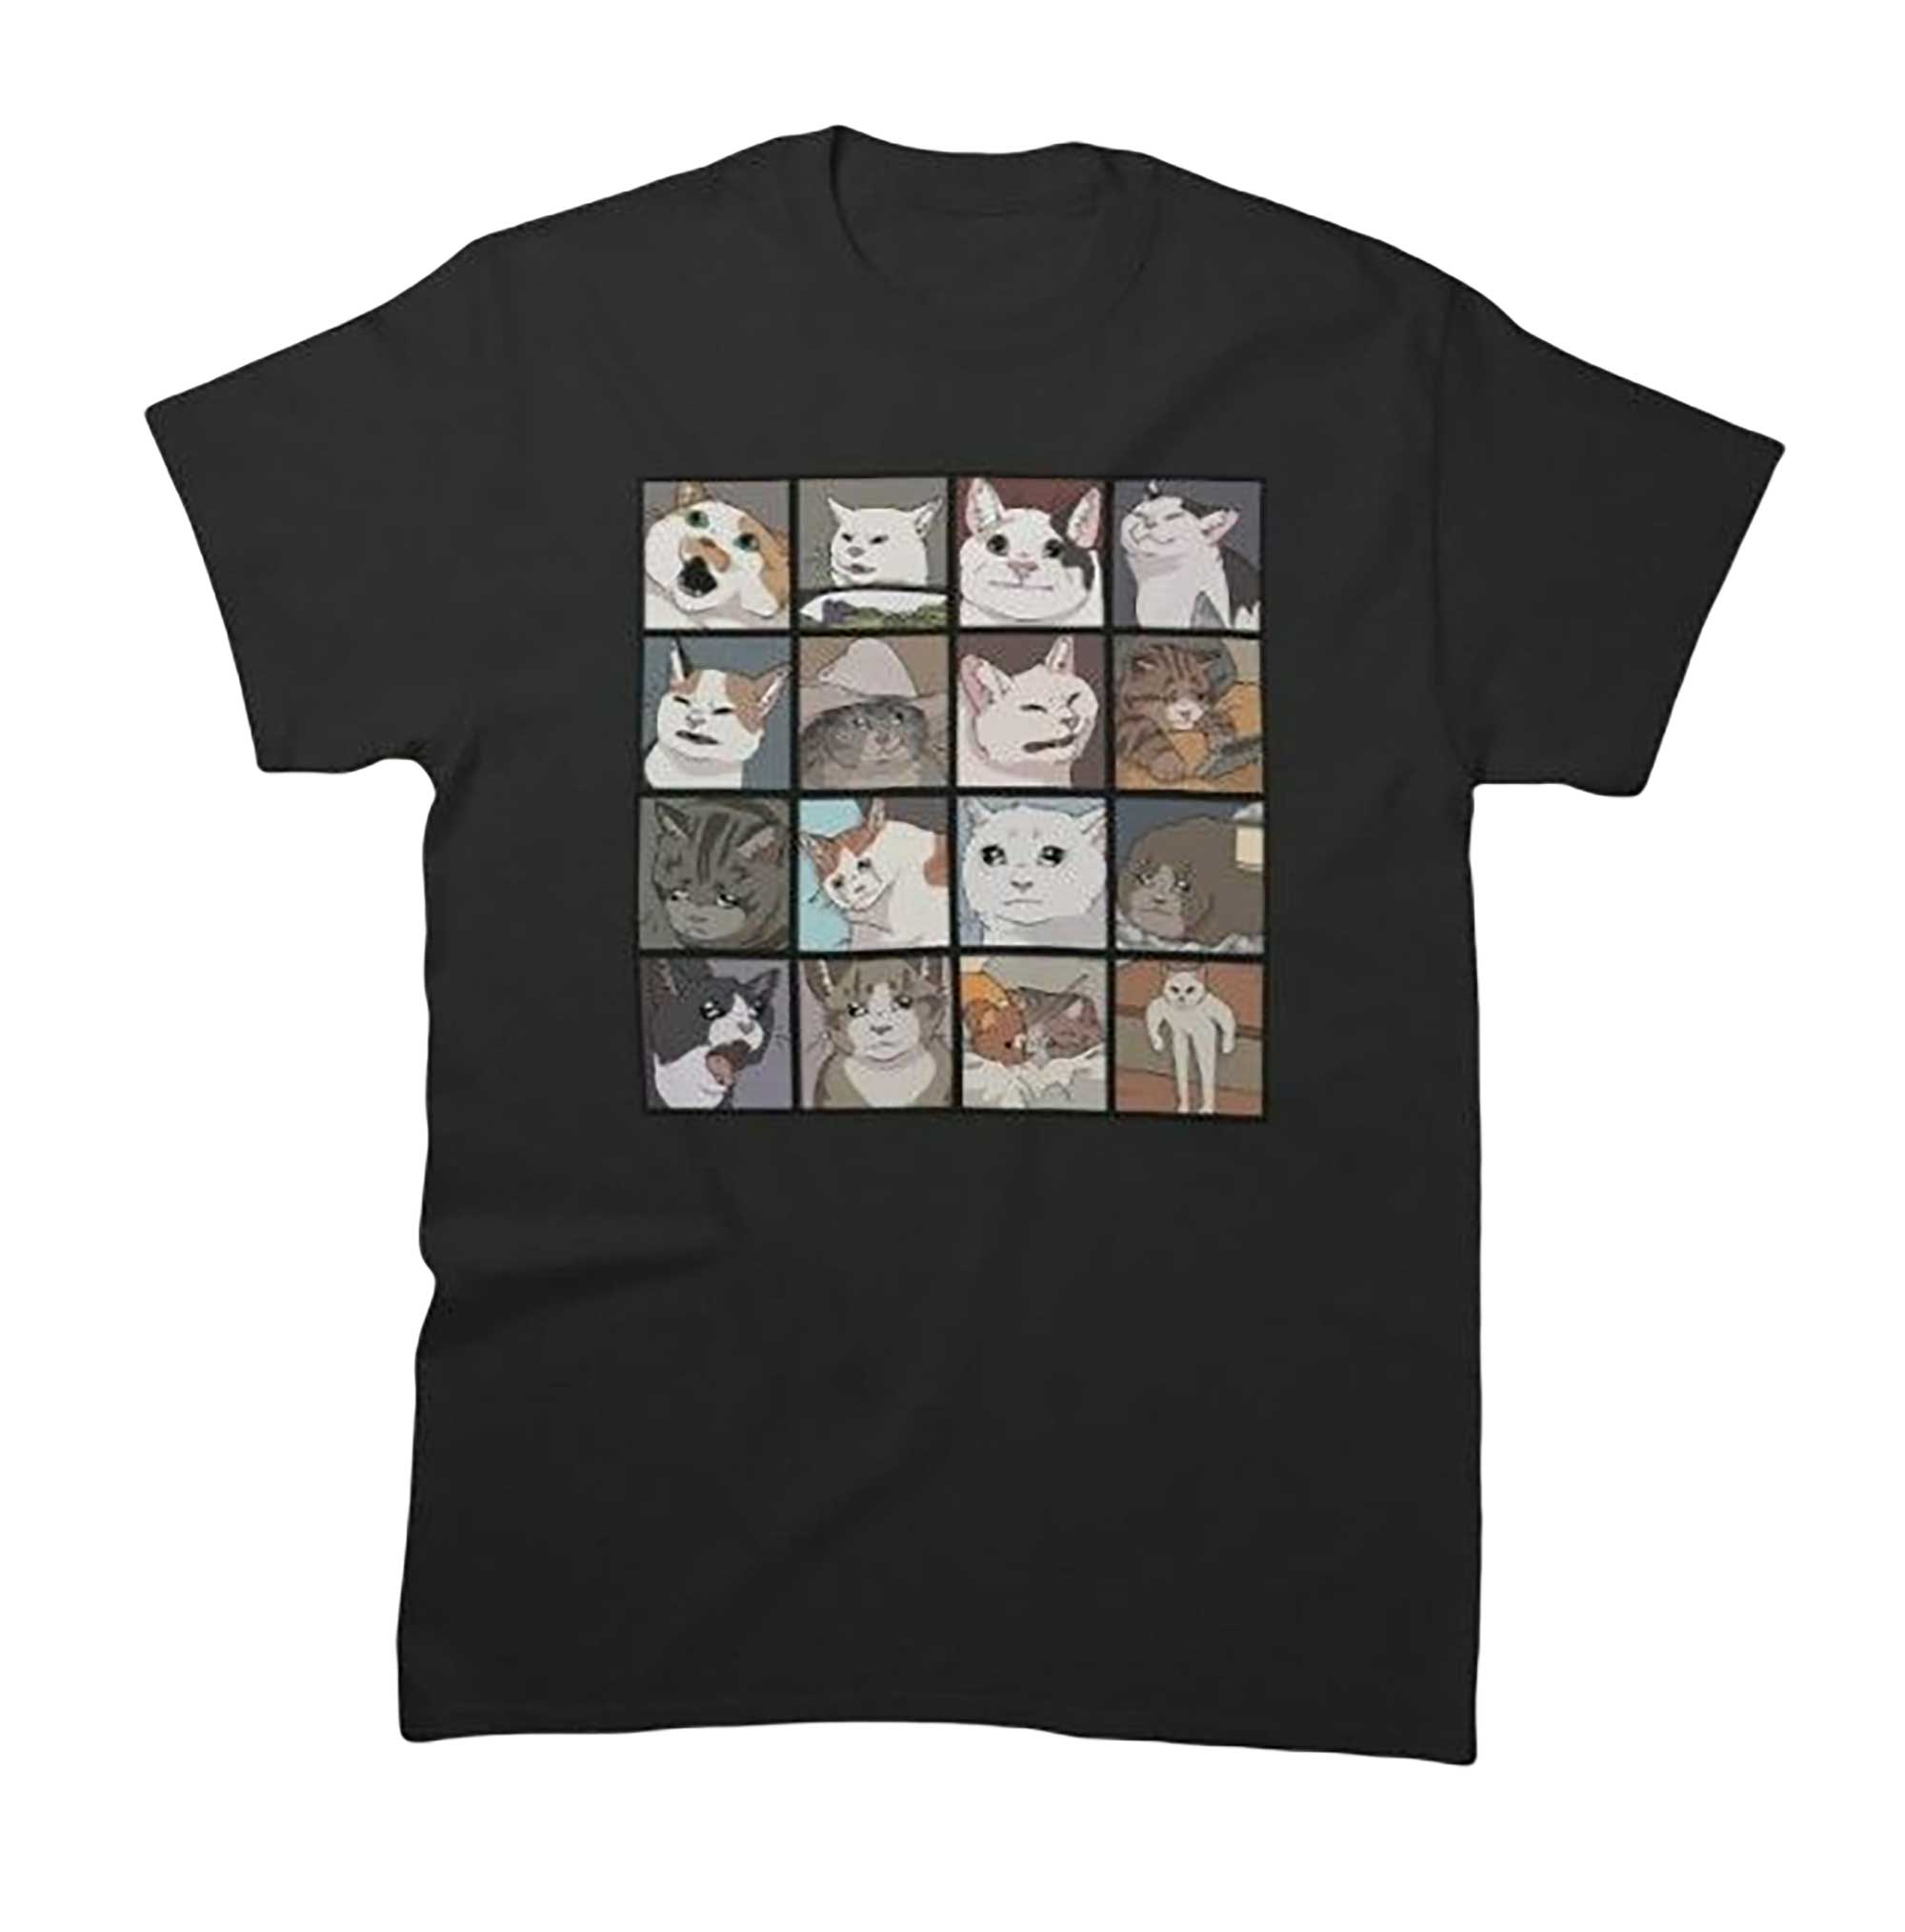 Skitongift-Cats-20-Classic-T-Shirt-Funny-Shirts-Hoodie-Sweater-Short-Sleeve-Casual-Shirt